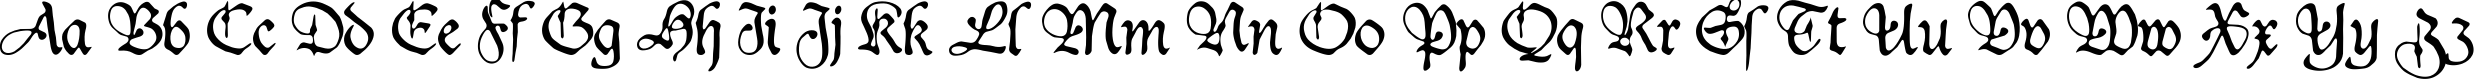 Пример написания английского алфавита шрифтом Duke